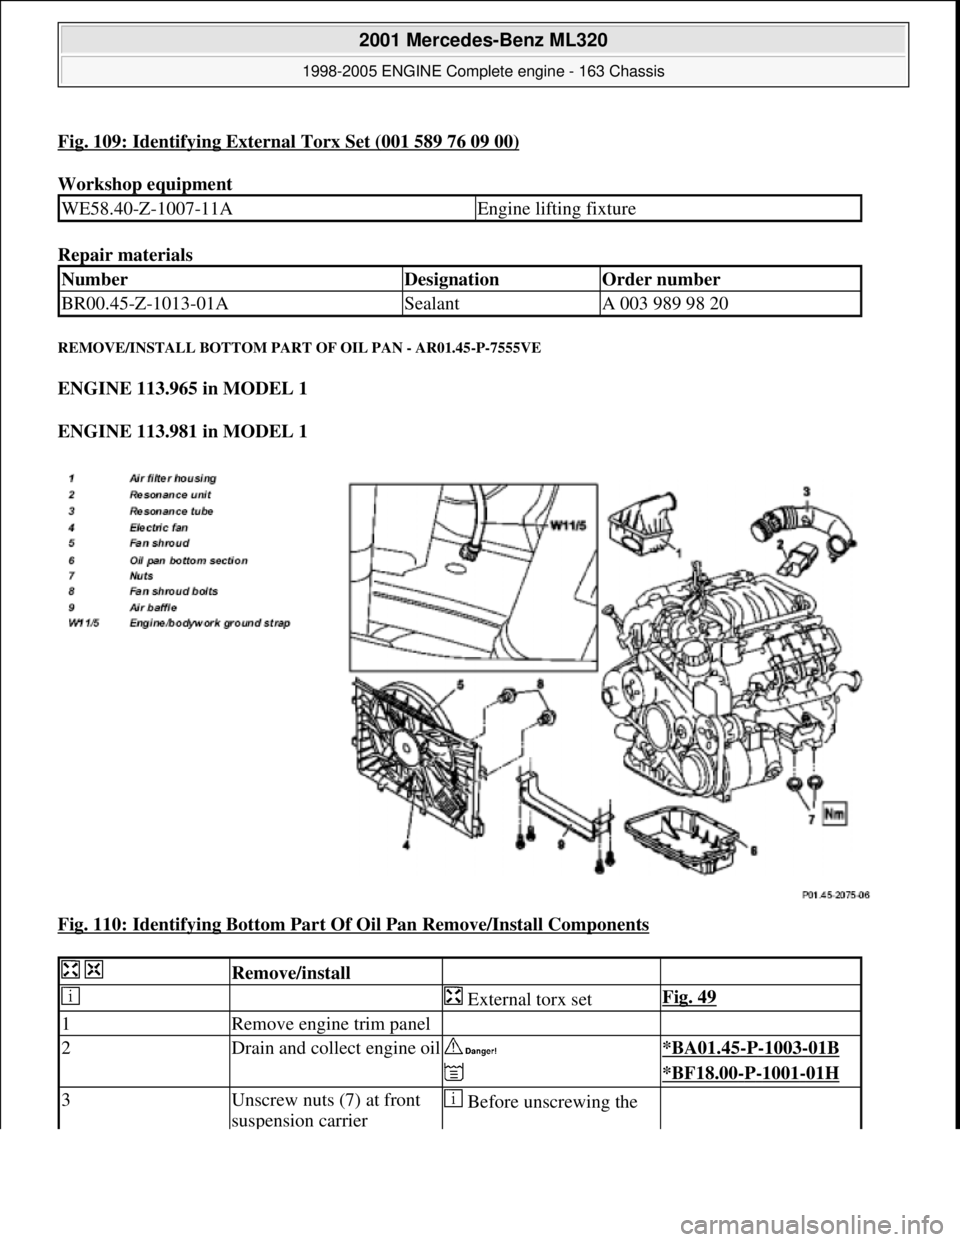 MERCEDES-BENZ ML500 1997  Complete Repair Manual Fig. 109: Identifying External Torx Set (001 589 76 09 00)
Workshop equipment   
Repair materials   
REMOVE/INSTALL BOTTOM PART  OF OIL PAN - AR01.45-P-7555VE 
ENGINE 113.965 in MODEL 1   
ENGINE 113.